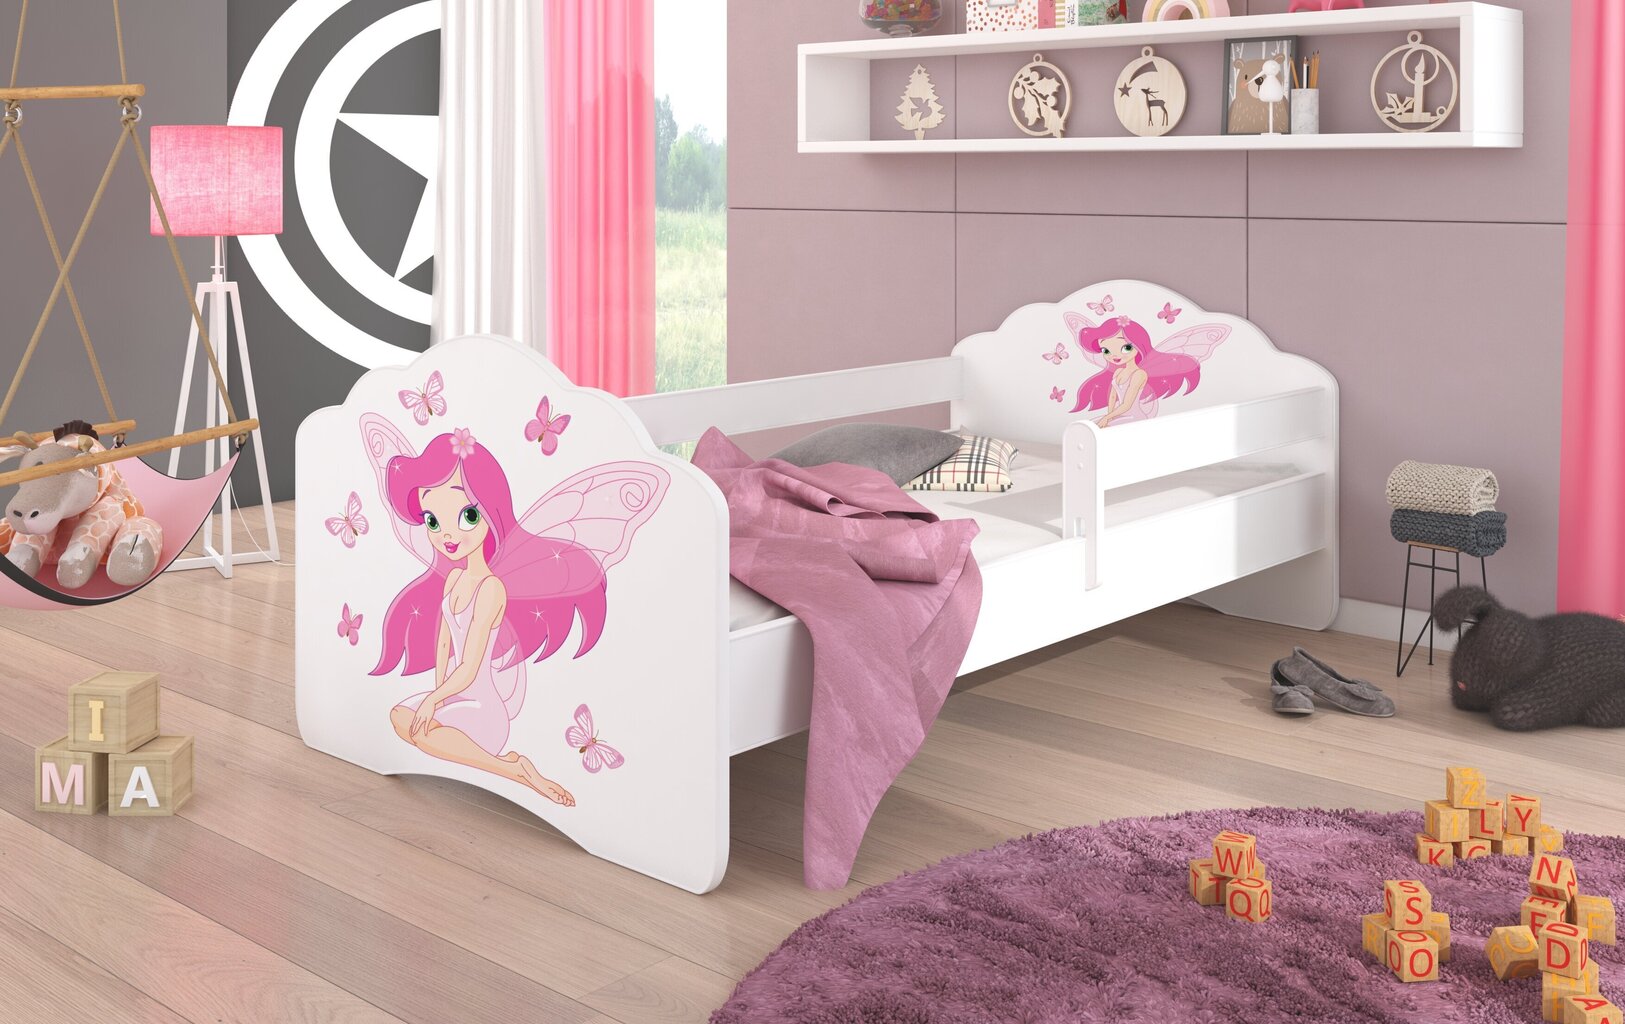 Bērnu gulta ar noņemamu aizsargu ADRK Furniture Casimo Girl with Wings, 80x160 cm cena un informācija | Bērnu gultas | 220.lv